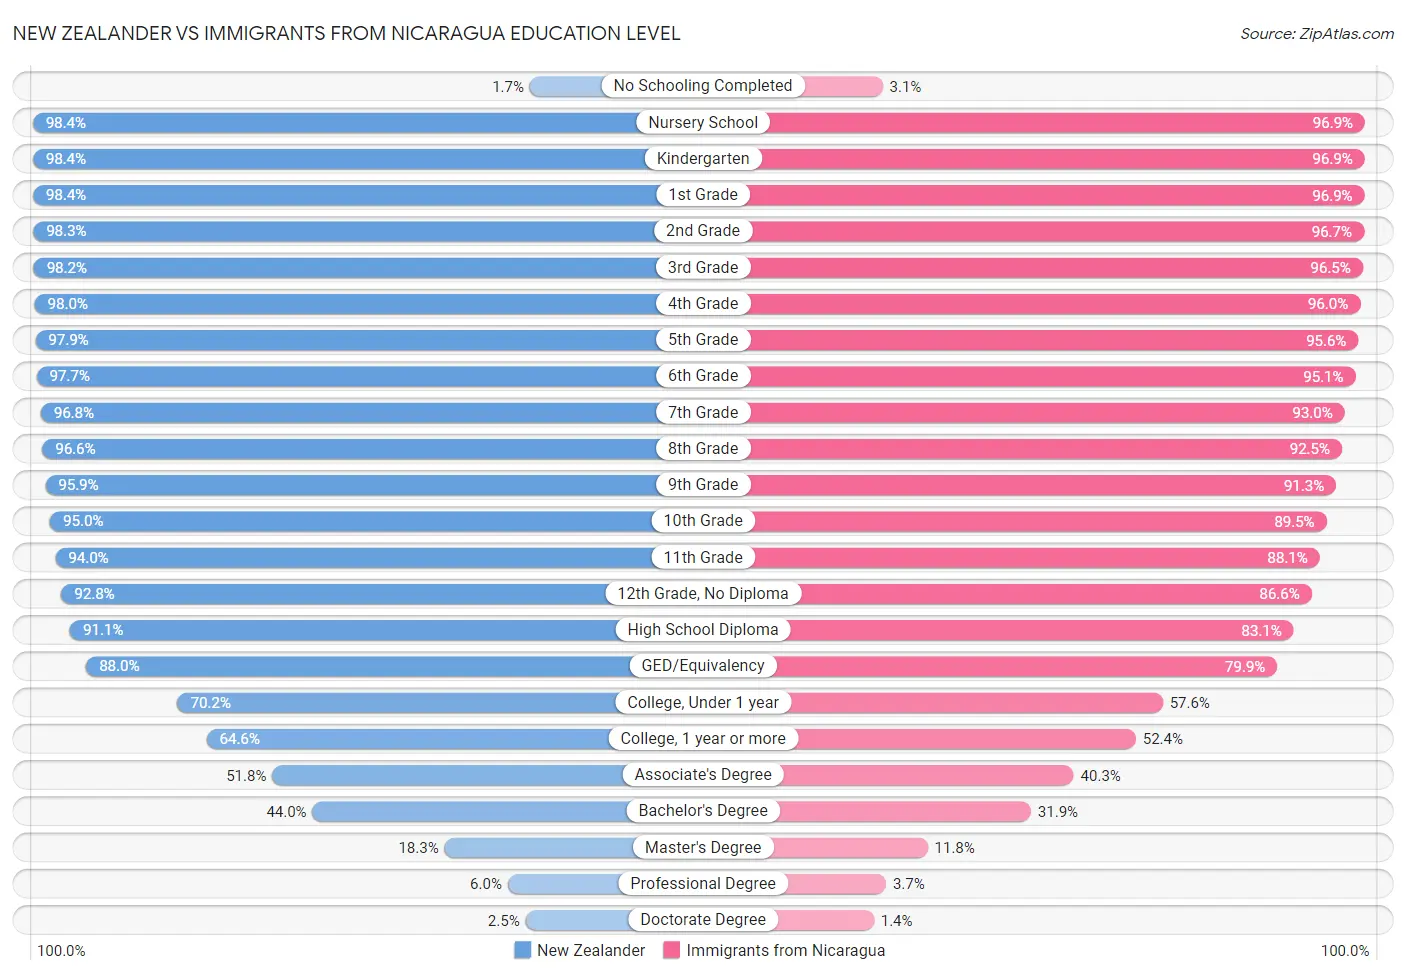 New Zealander vs Immigrants from Nicaragua Education Level